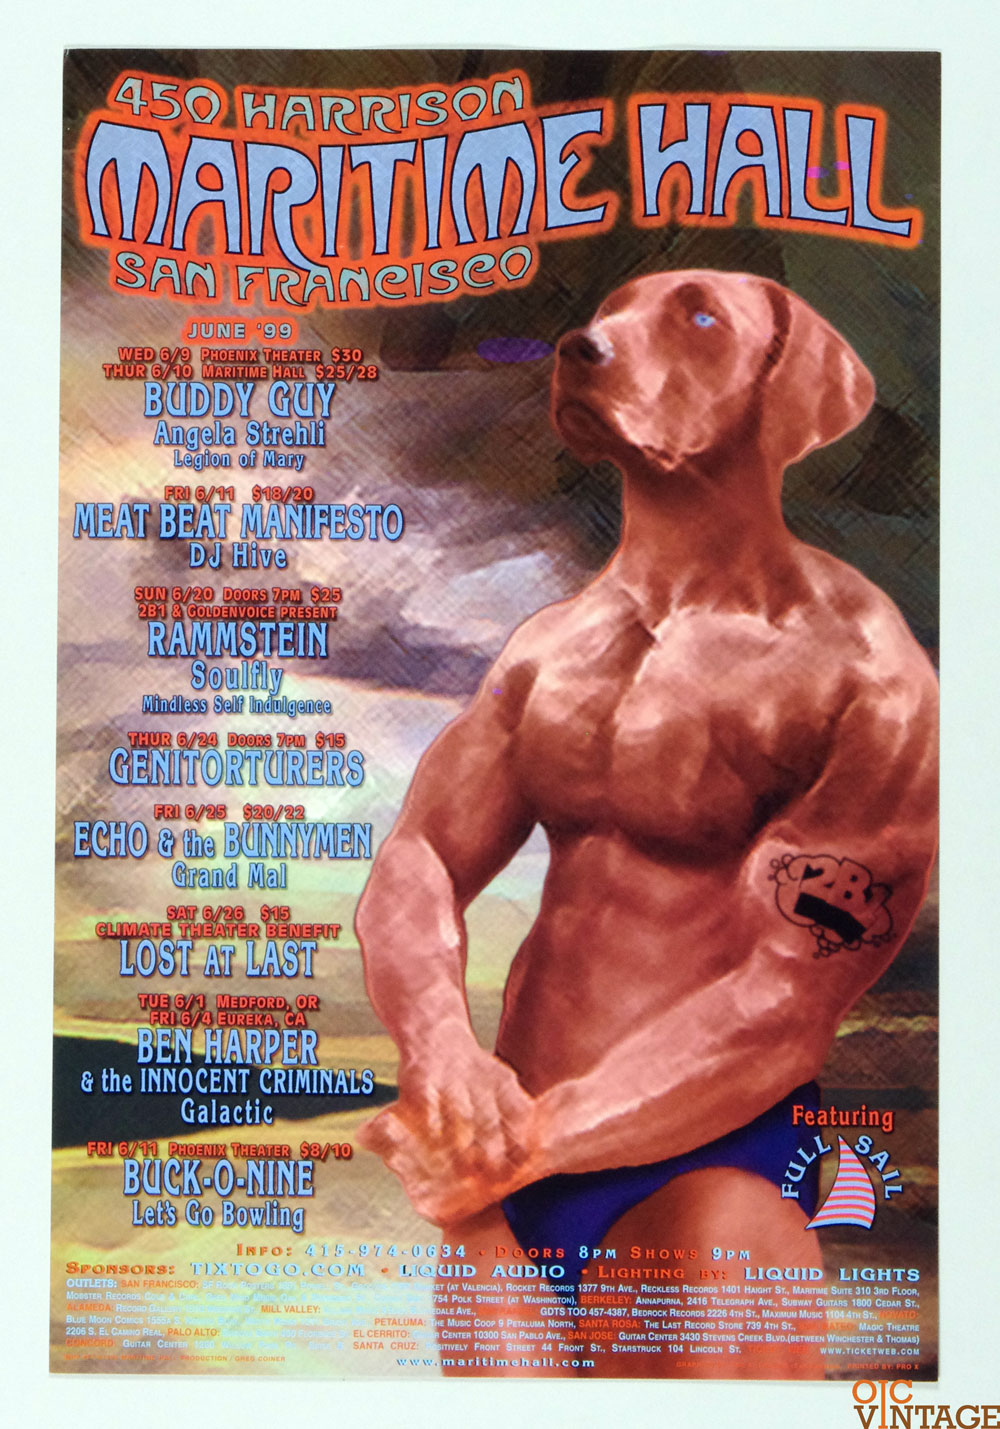 Maritime Hall 1999 Jun Poster Buddy Guy Meat Beat Manifesto Rammstein